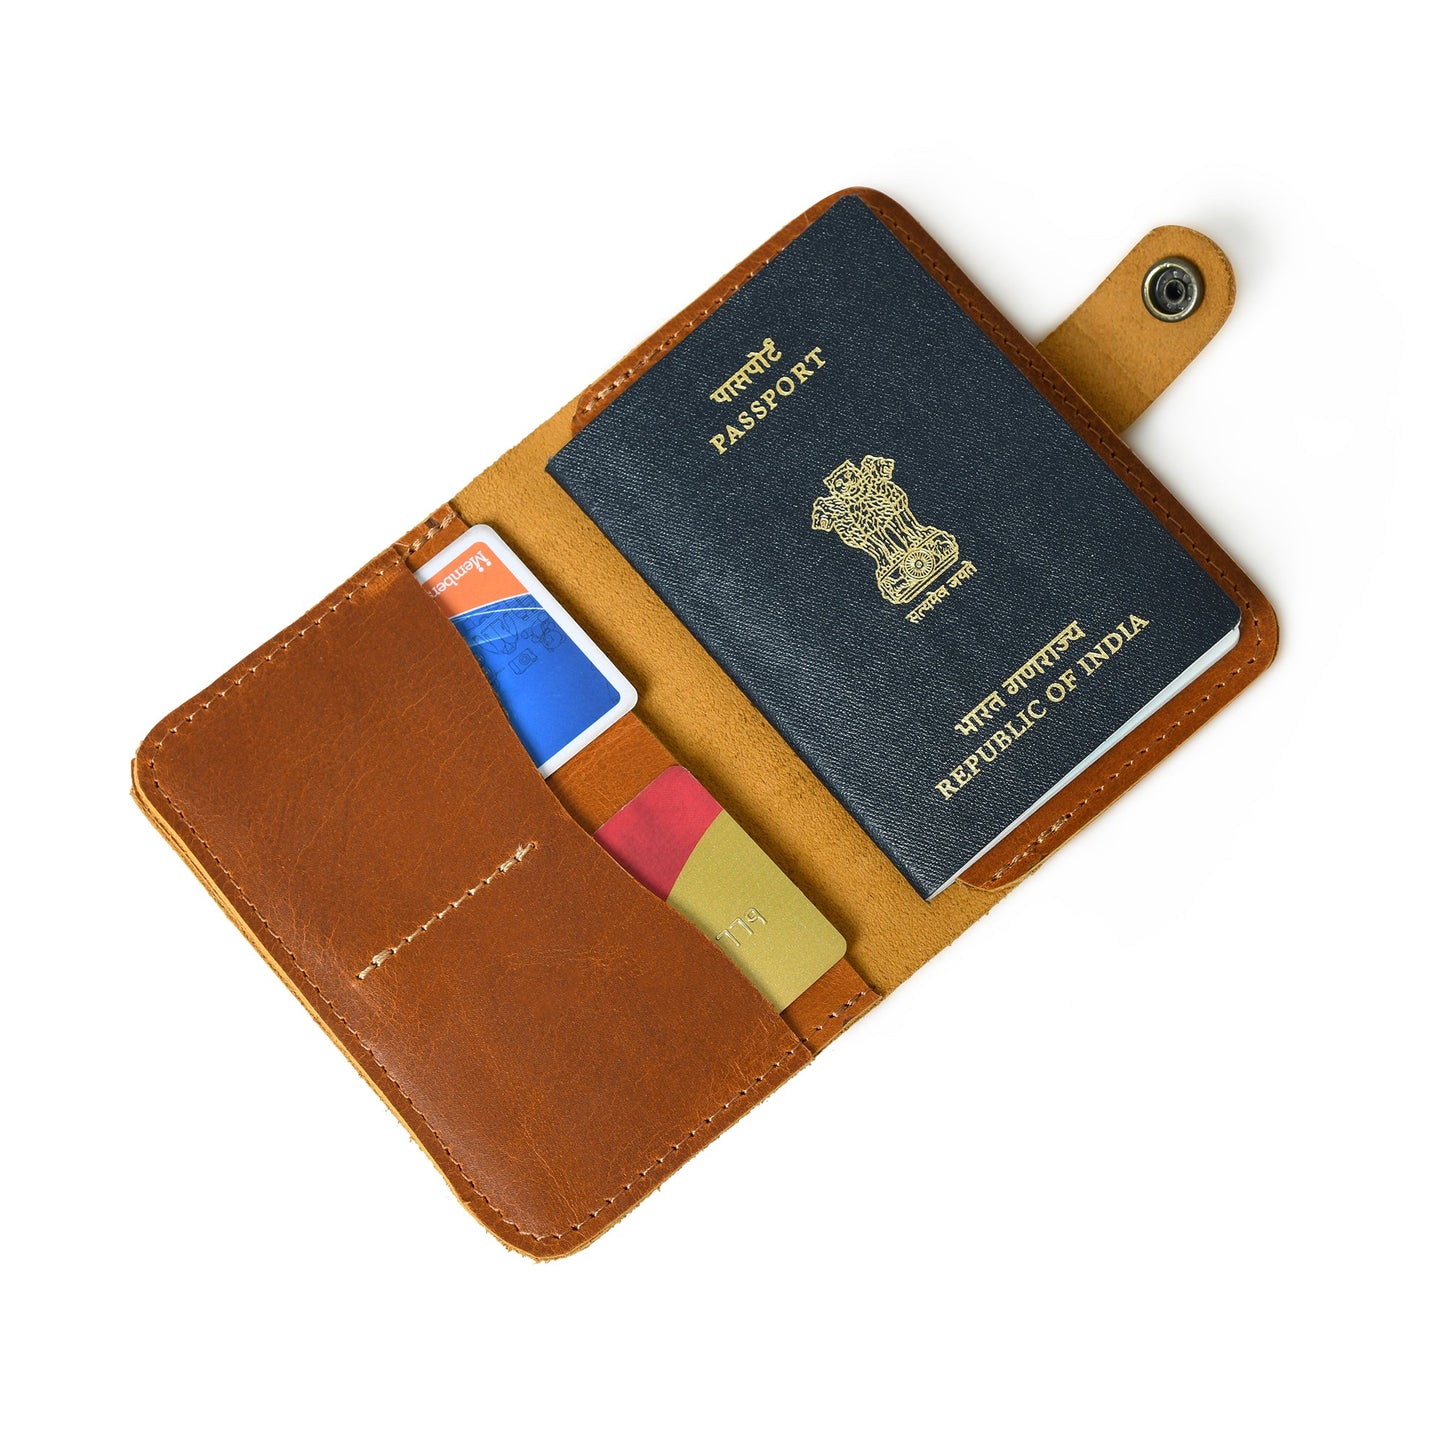 ChicVoyage Passport Sleeve - Tan Brown - The Tool Store